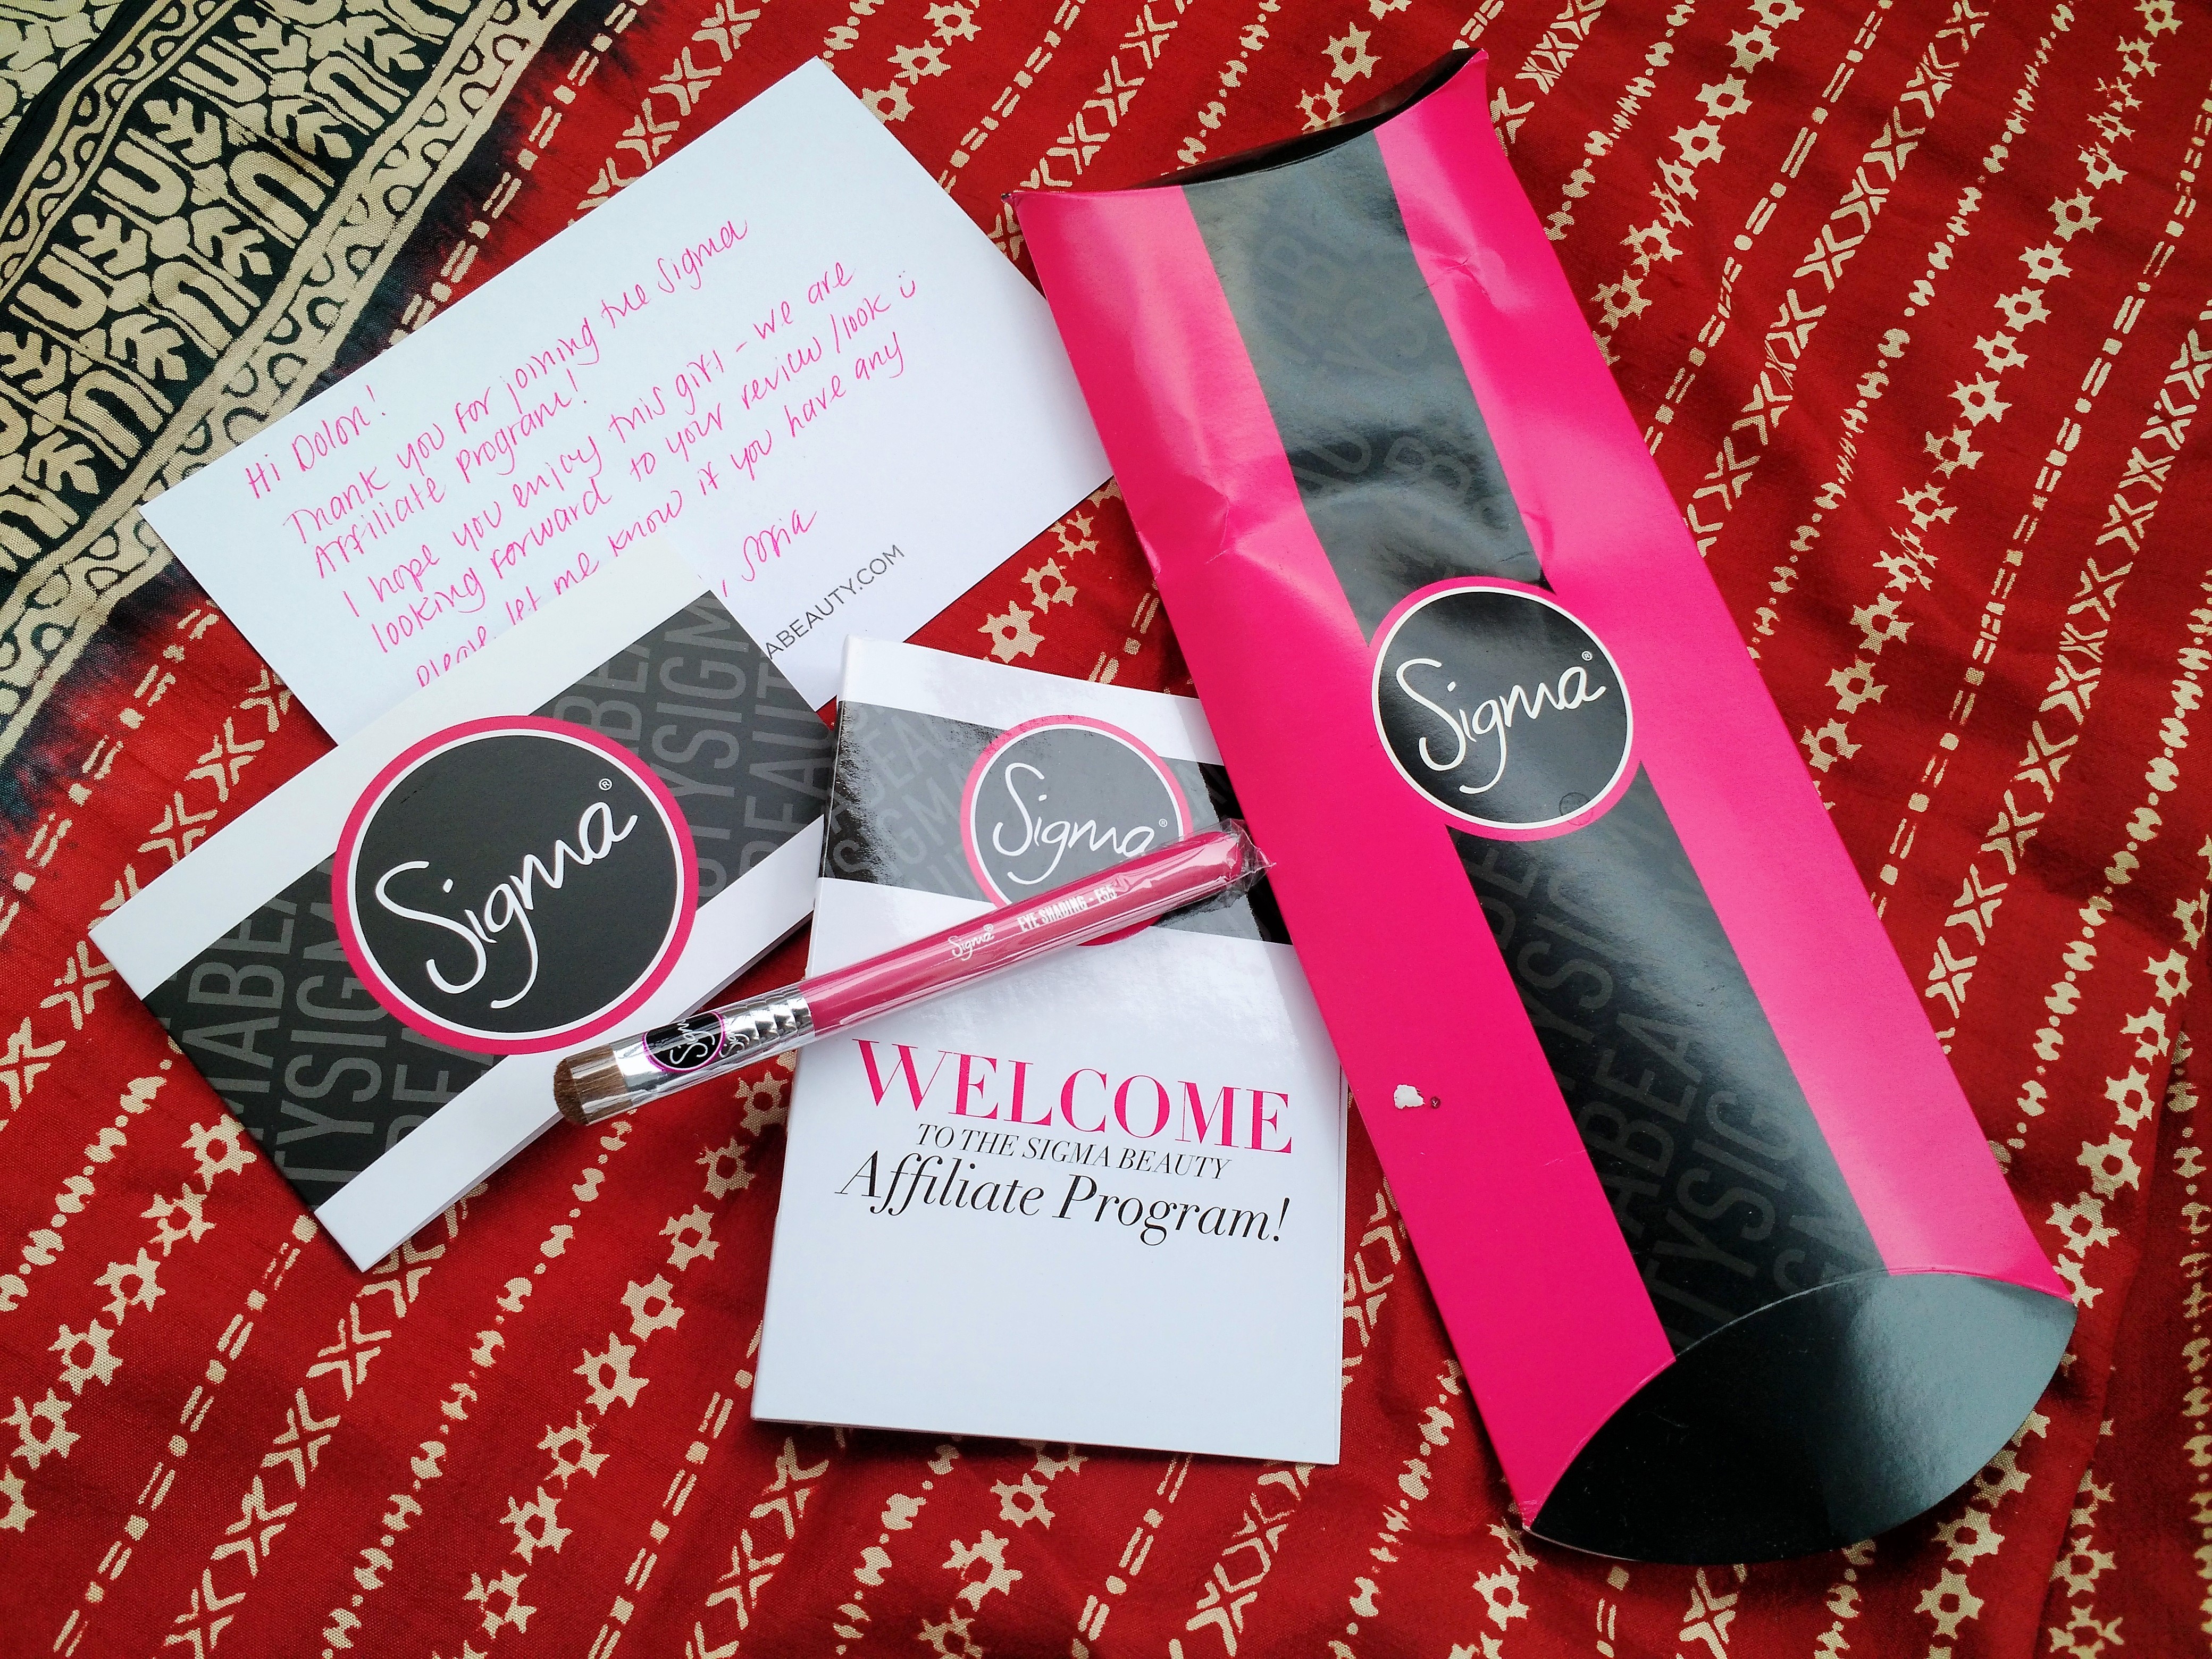 Sigma Beauty Affiliate Program Welcome Gift